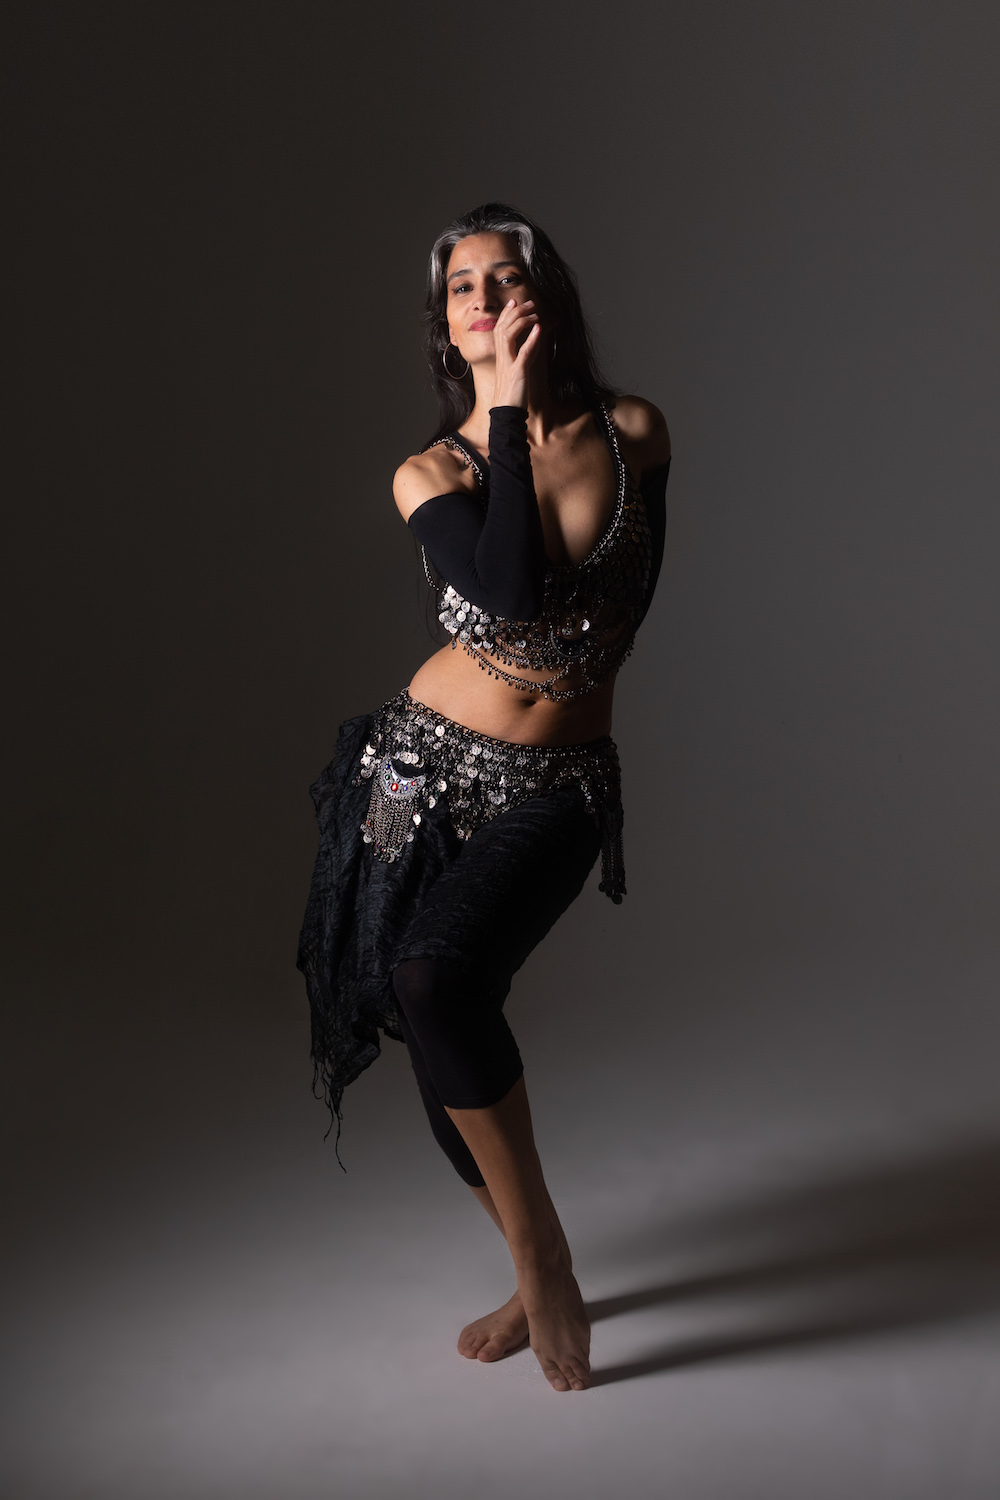 Bailarina de tribal fusion posando en un estudio